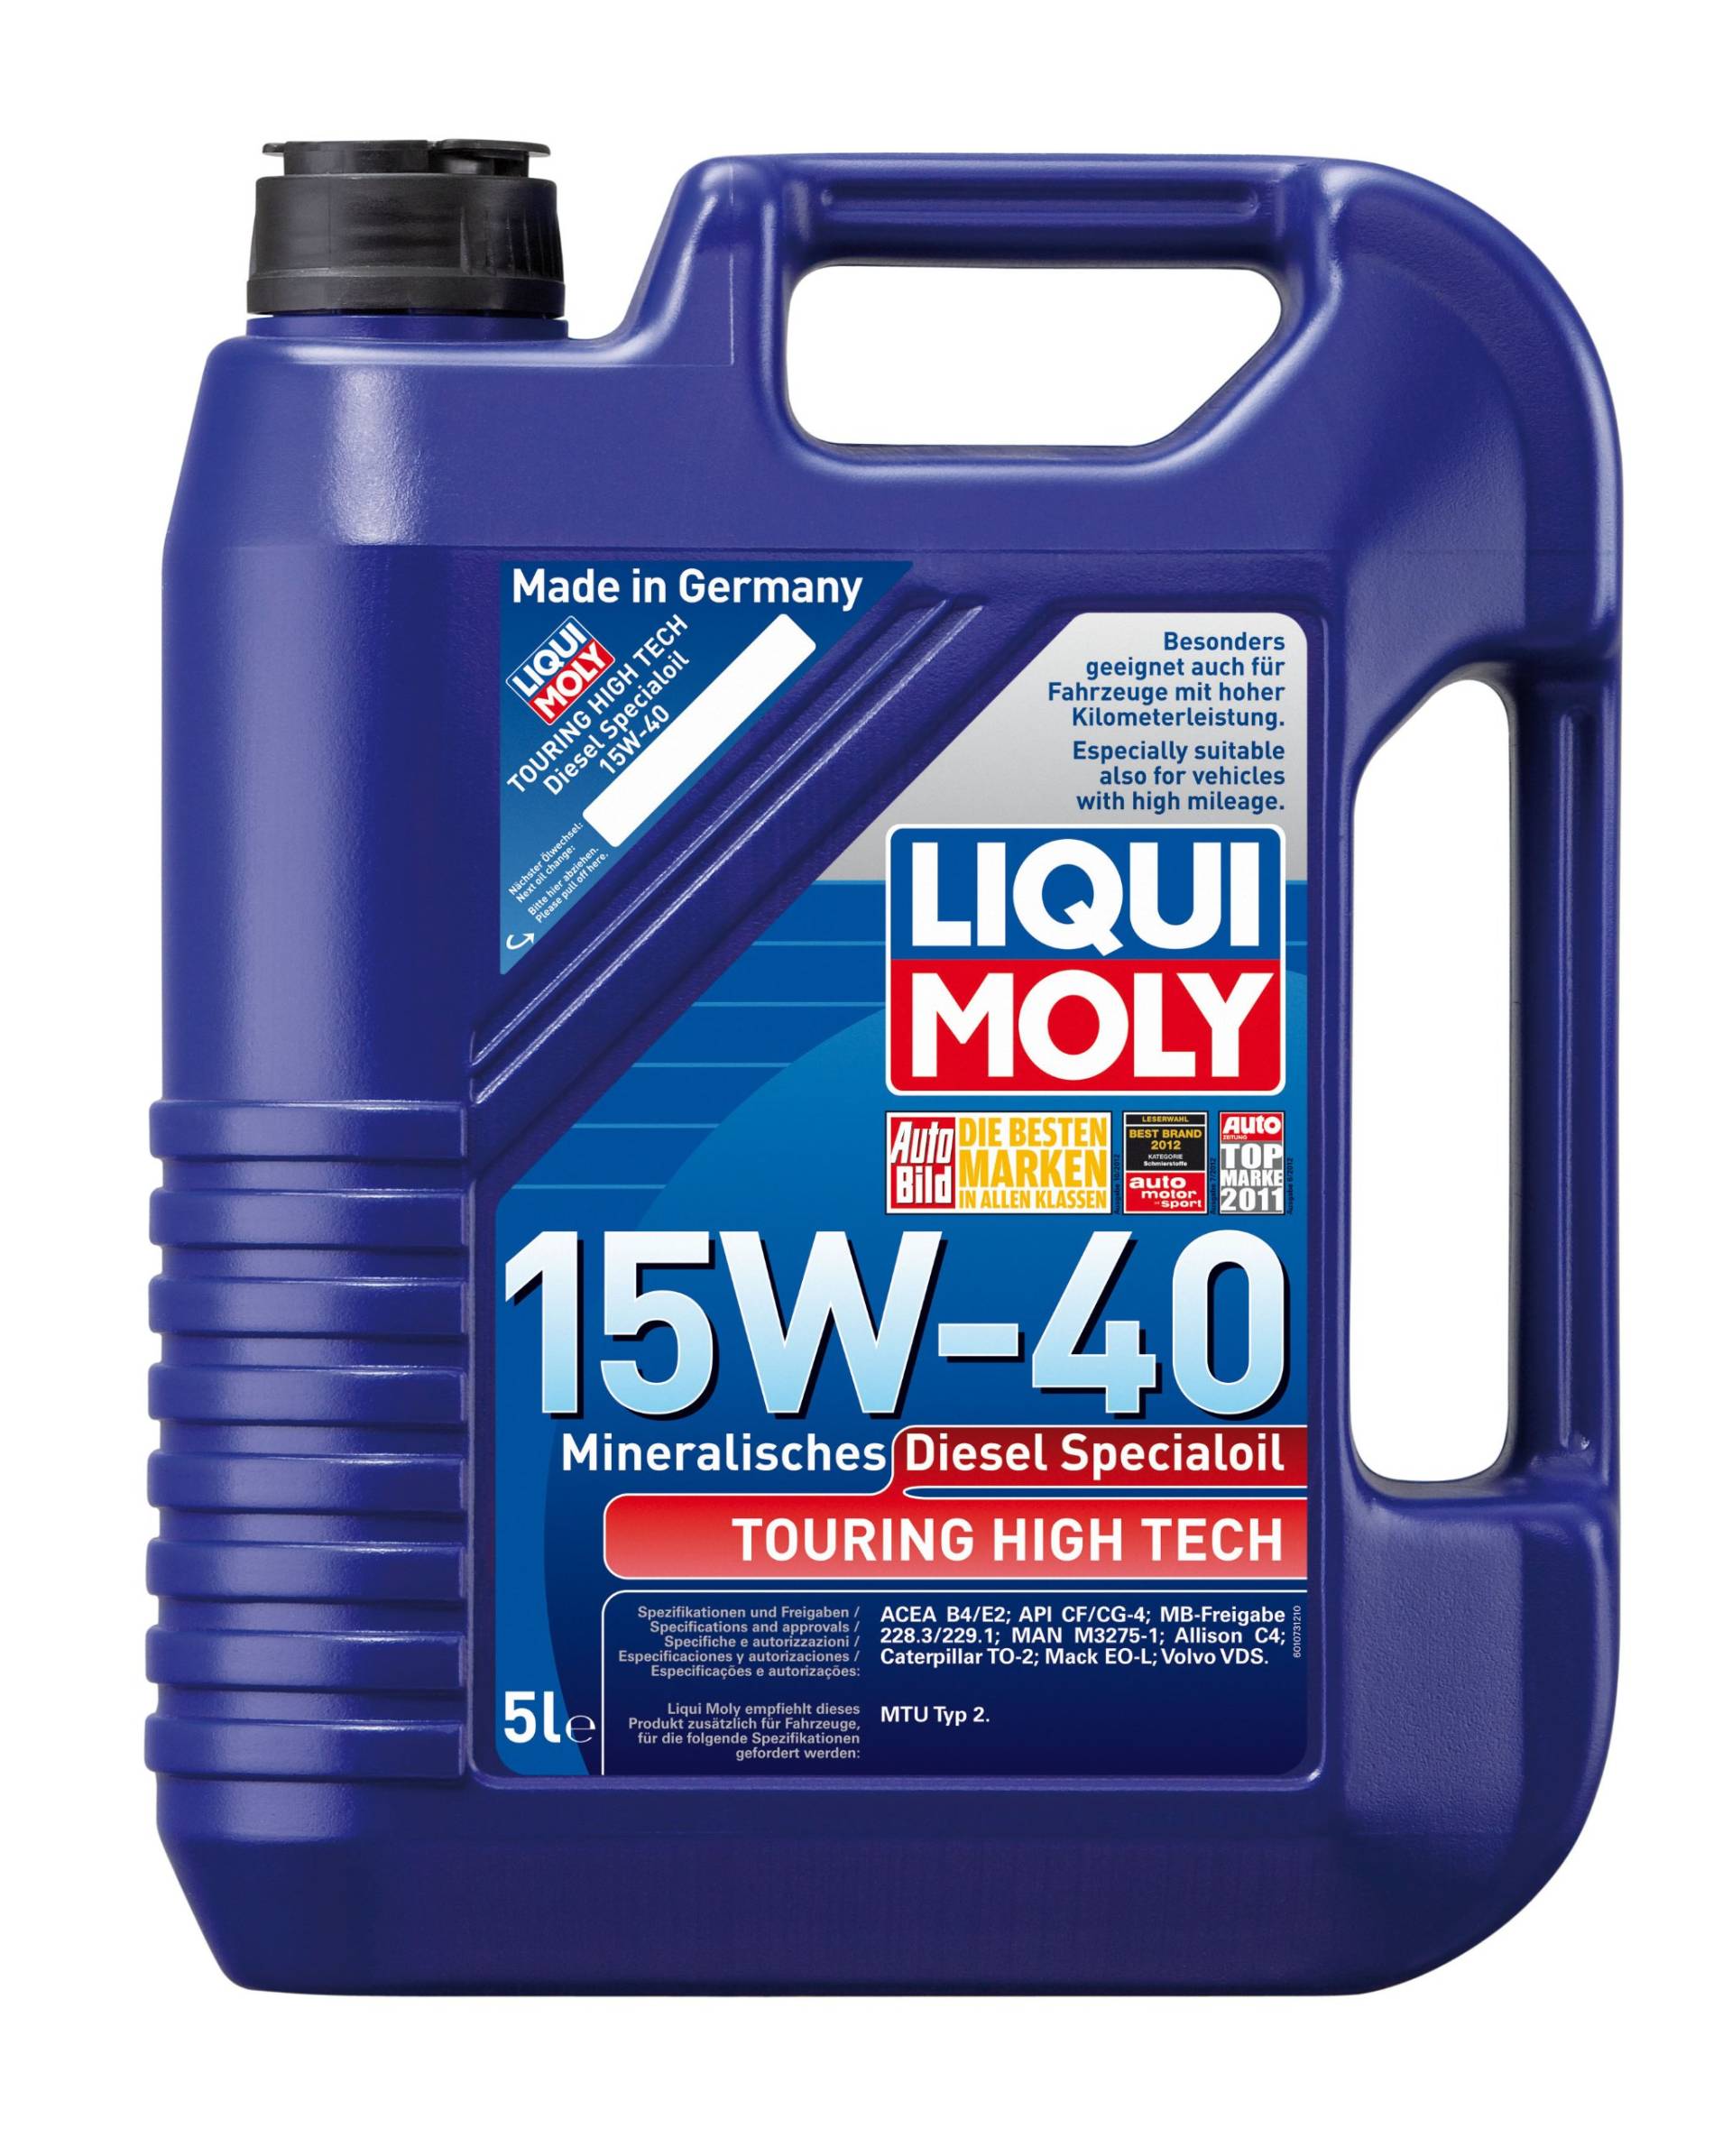 LIQUI MOLY Touring High Tech Diesel Specialoil 15W-40 | 5 L | mineralisches Motoröl | Art.-Nr.: 1073 von Liqui Moly